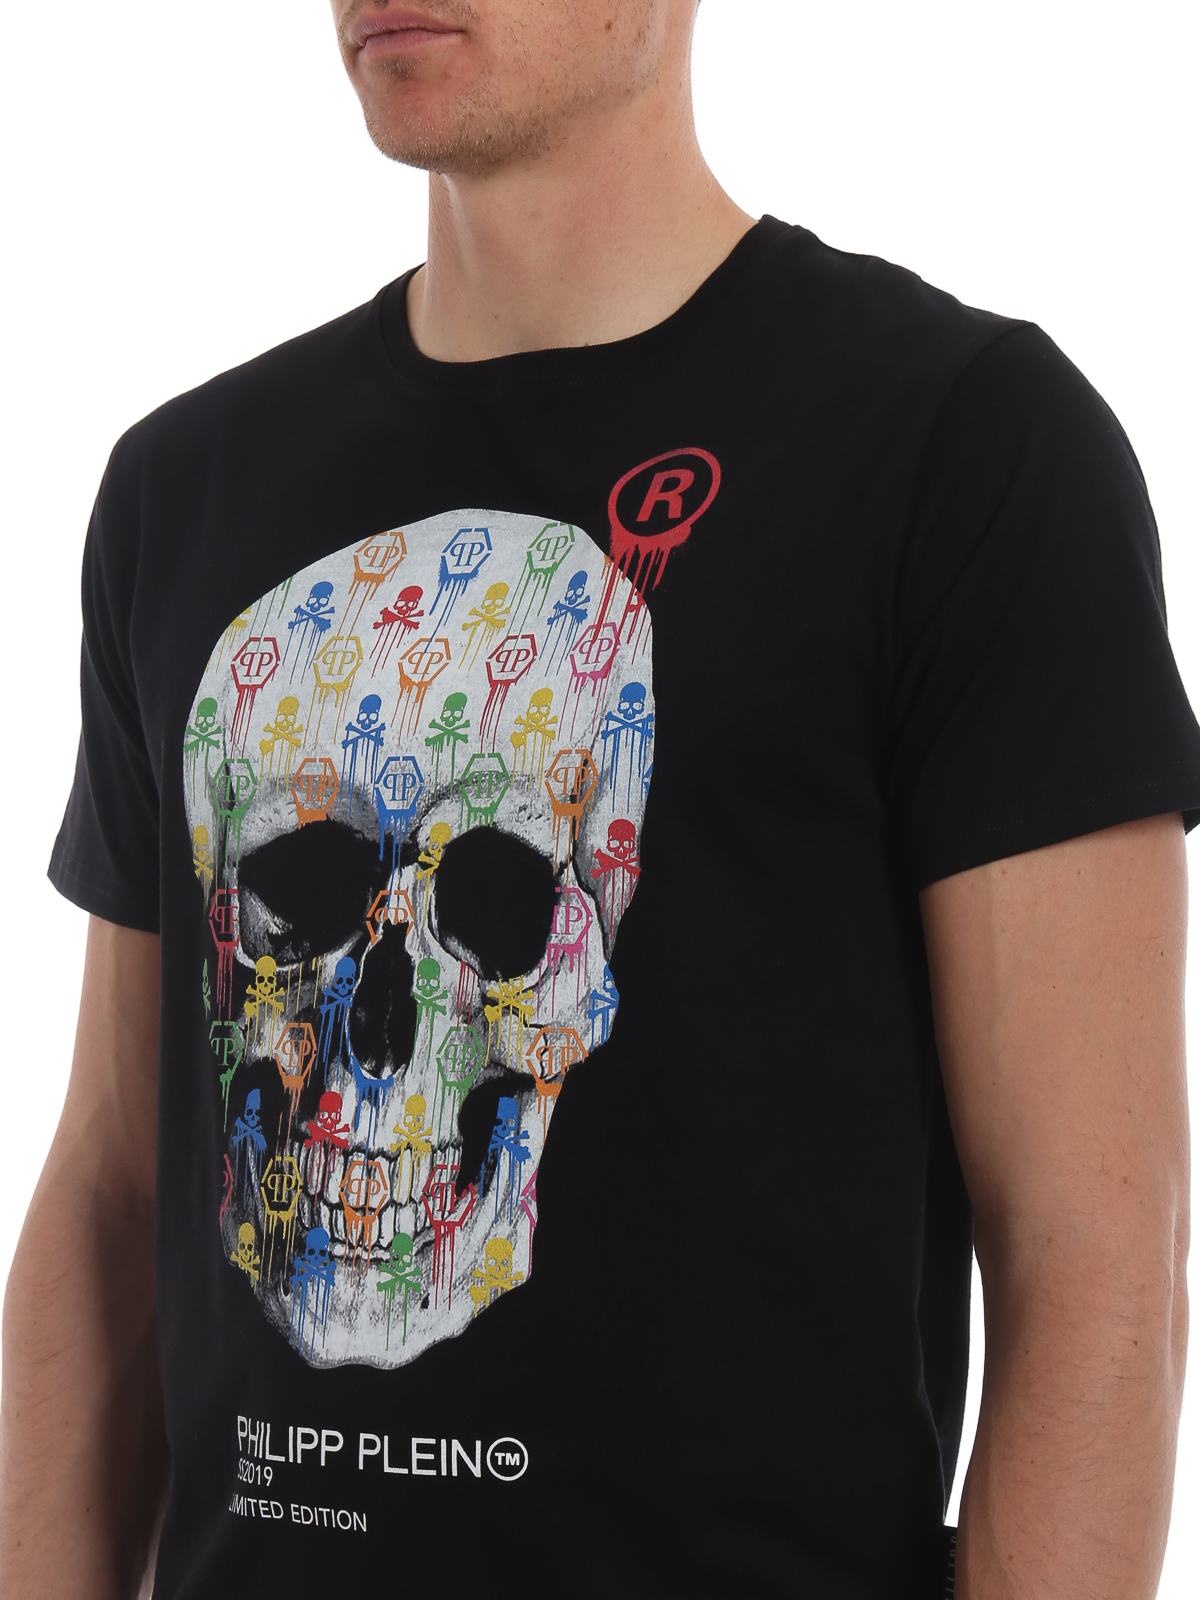 Symfonie Uitbreiding Geleend T-shirts Philipp Plein - Skull SS2019 Limited Edition T-shirt -  P19CMTK3401PJY002N02